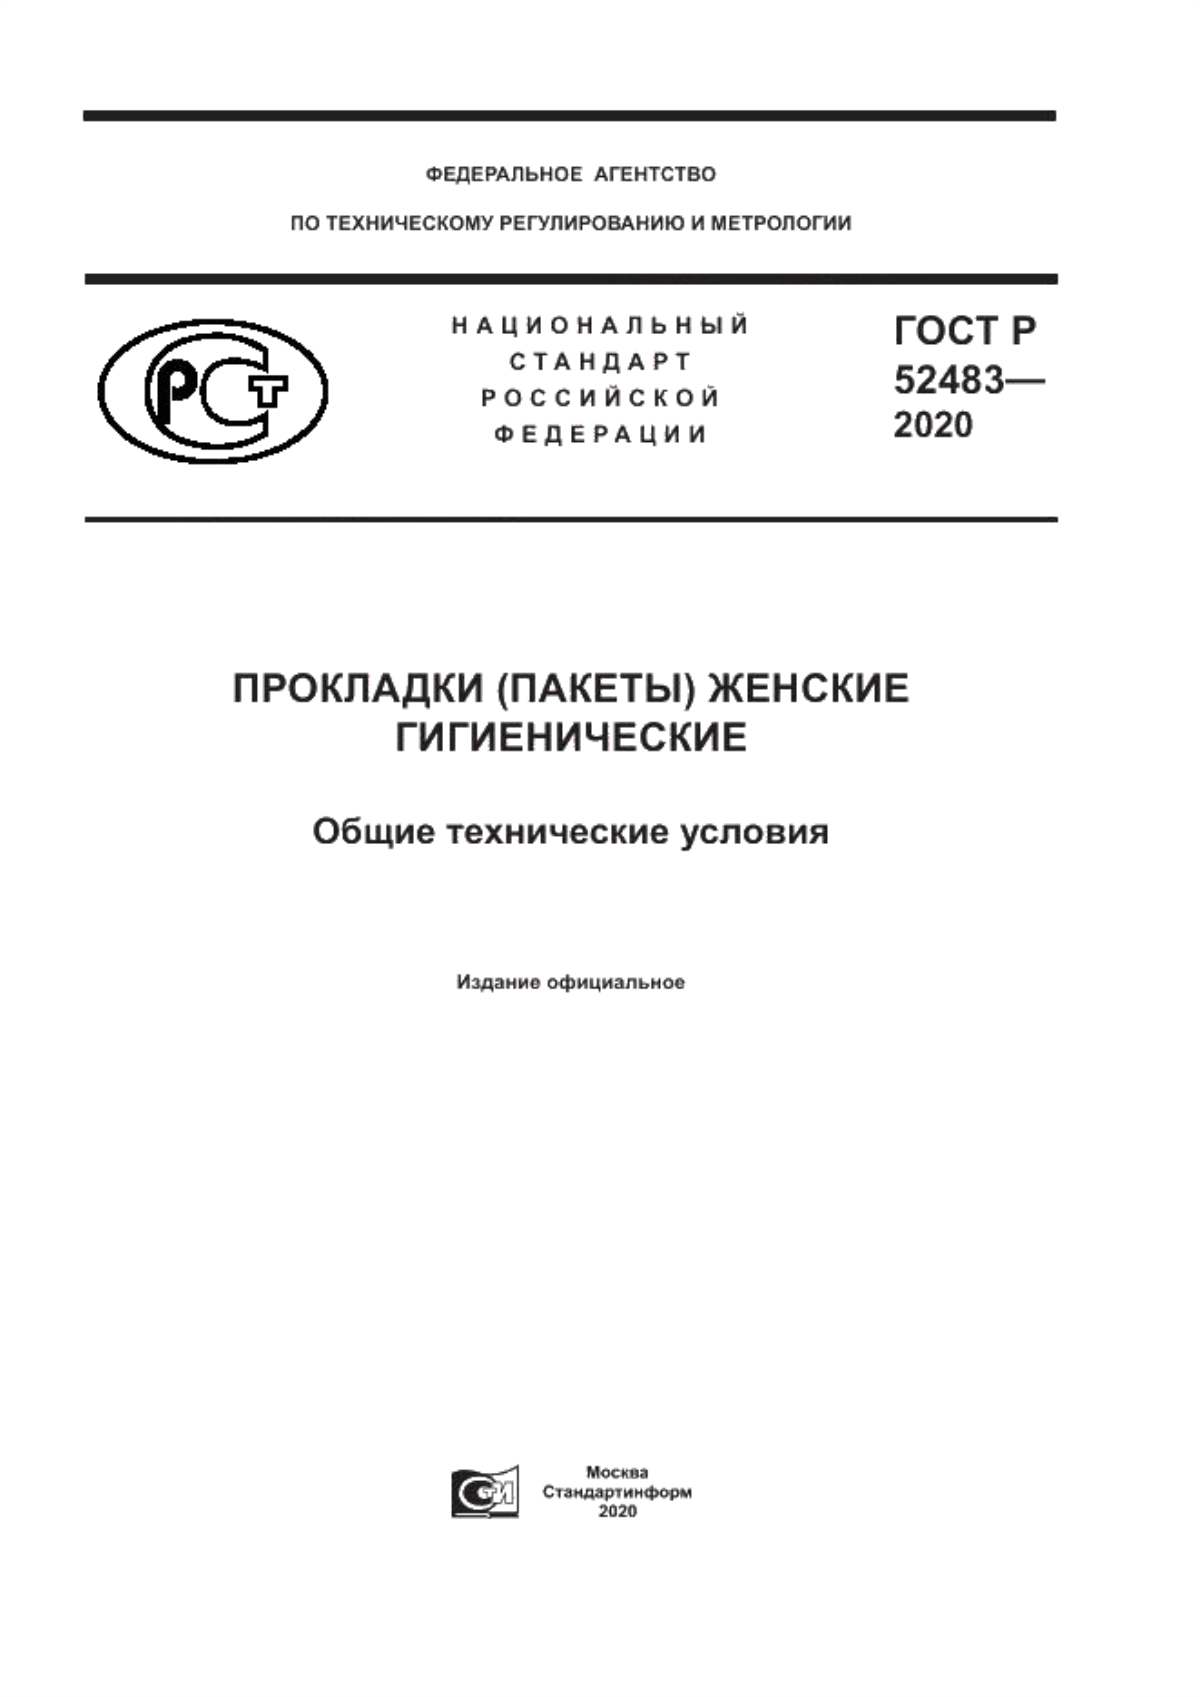 ГОСТ Р 52483-2020 Прокладки (пакеты) женские гигиенические. Общие технические условия